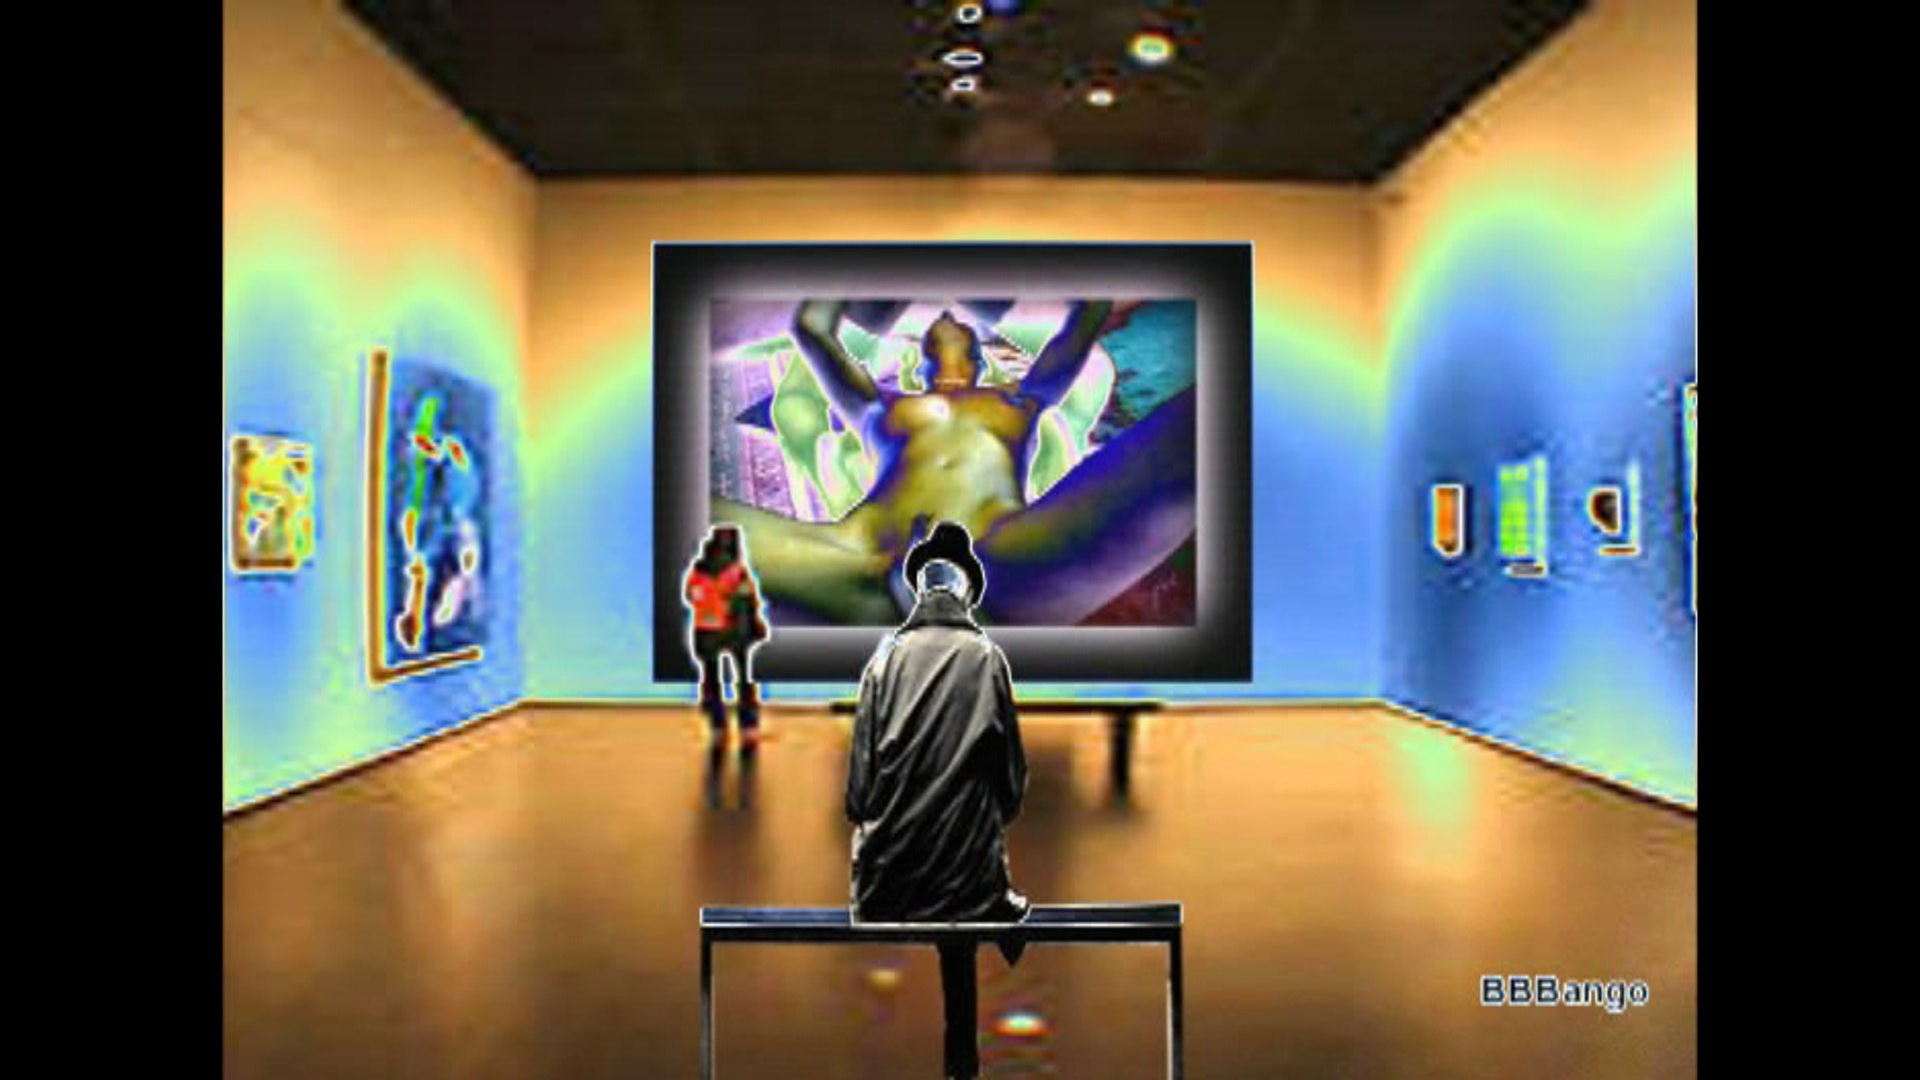 Art Gallery. Music by BB Bango